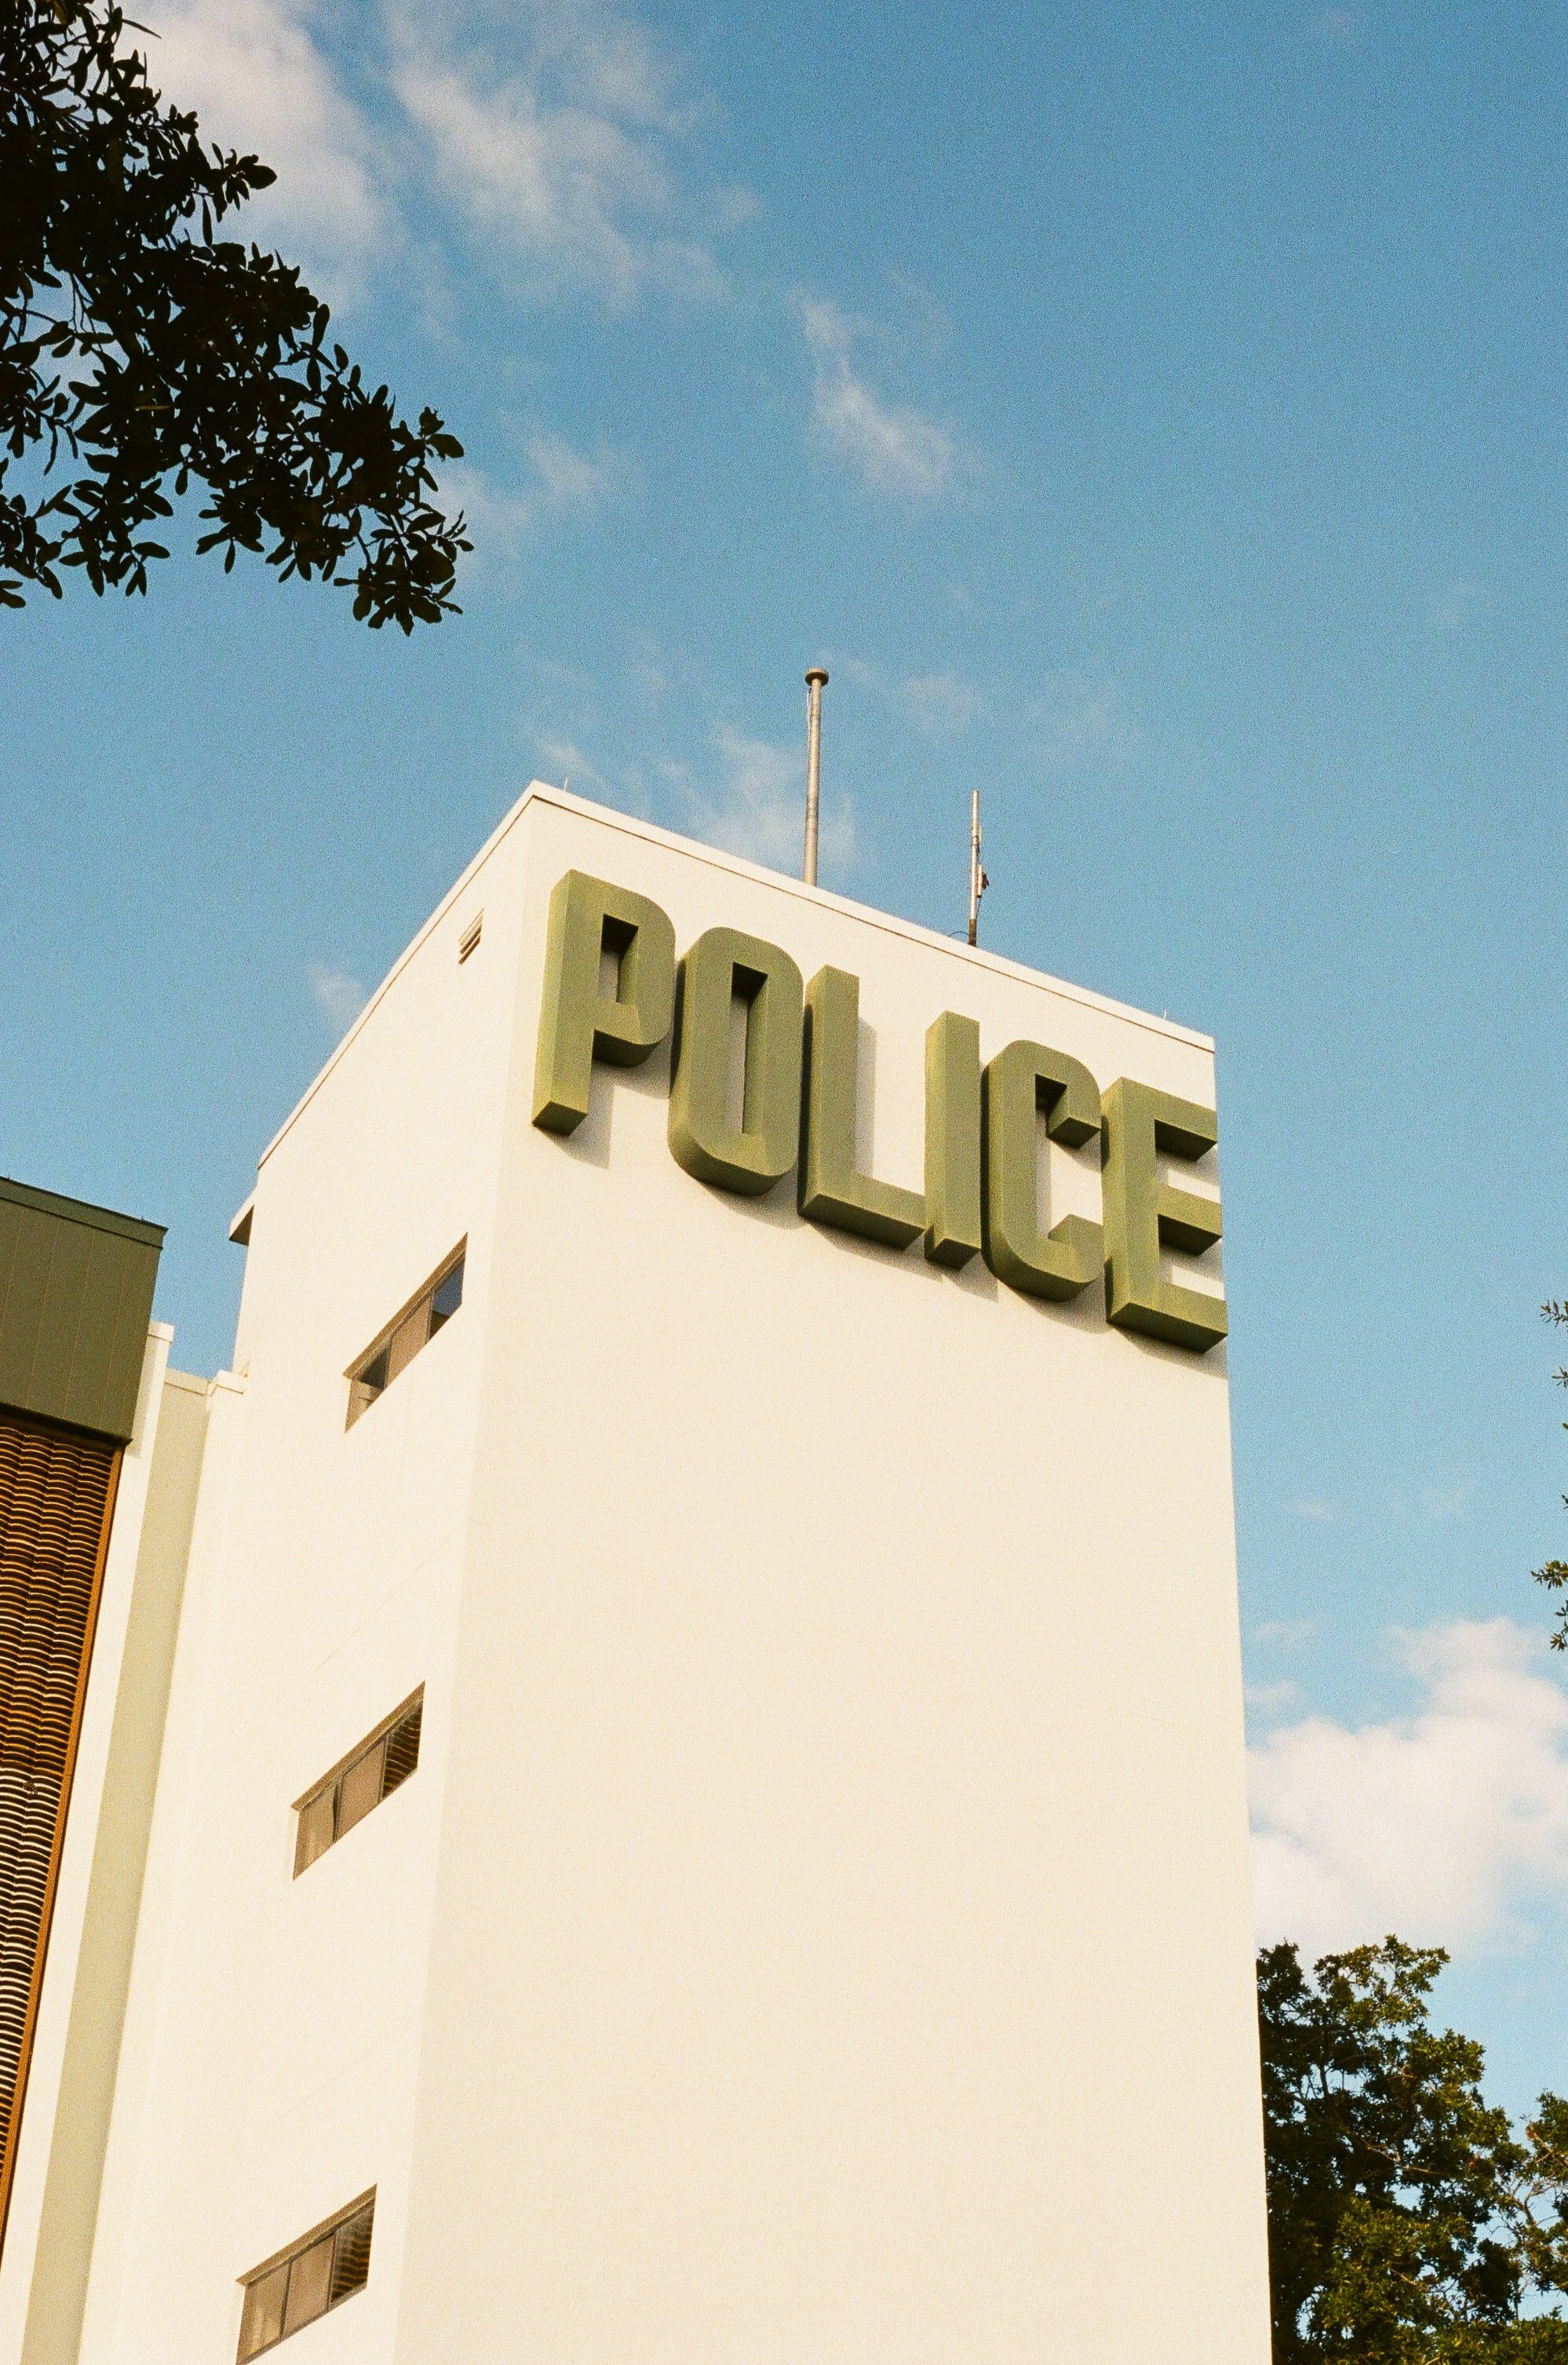 Police building | Photo: Unsplash